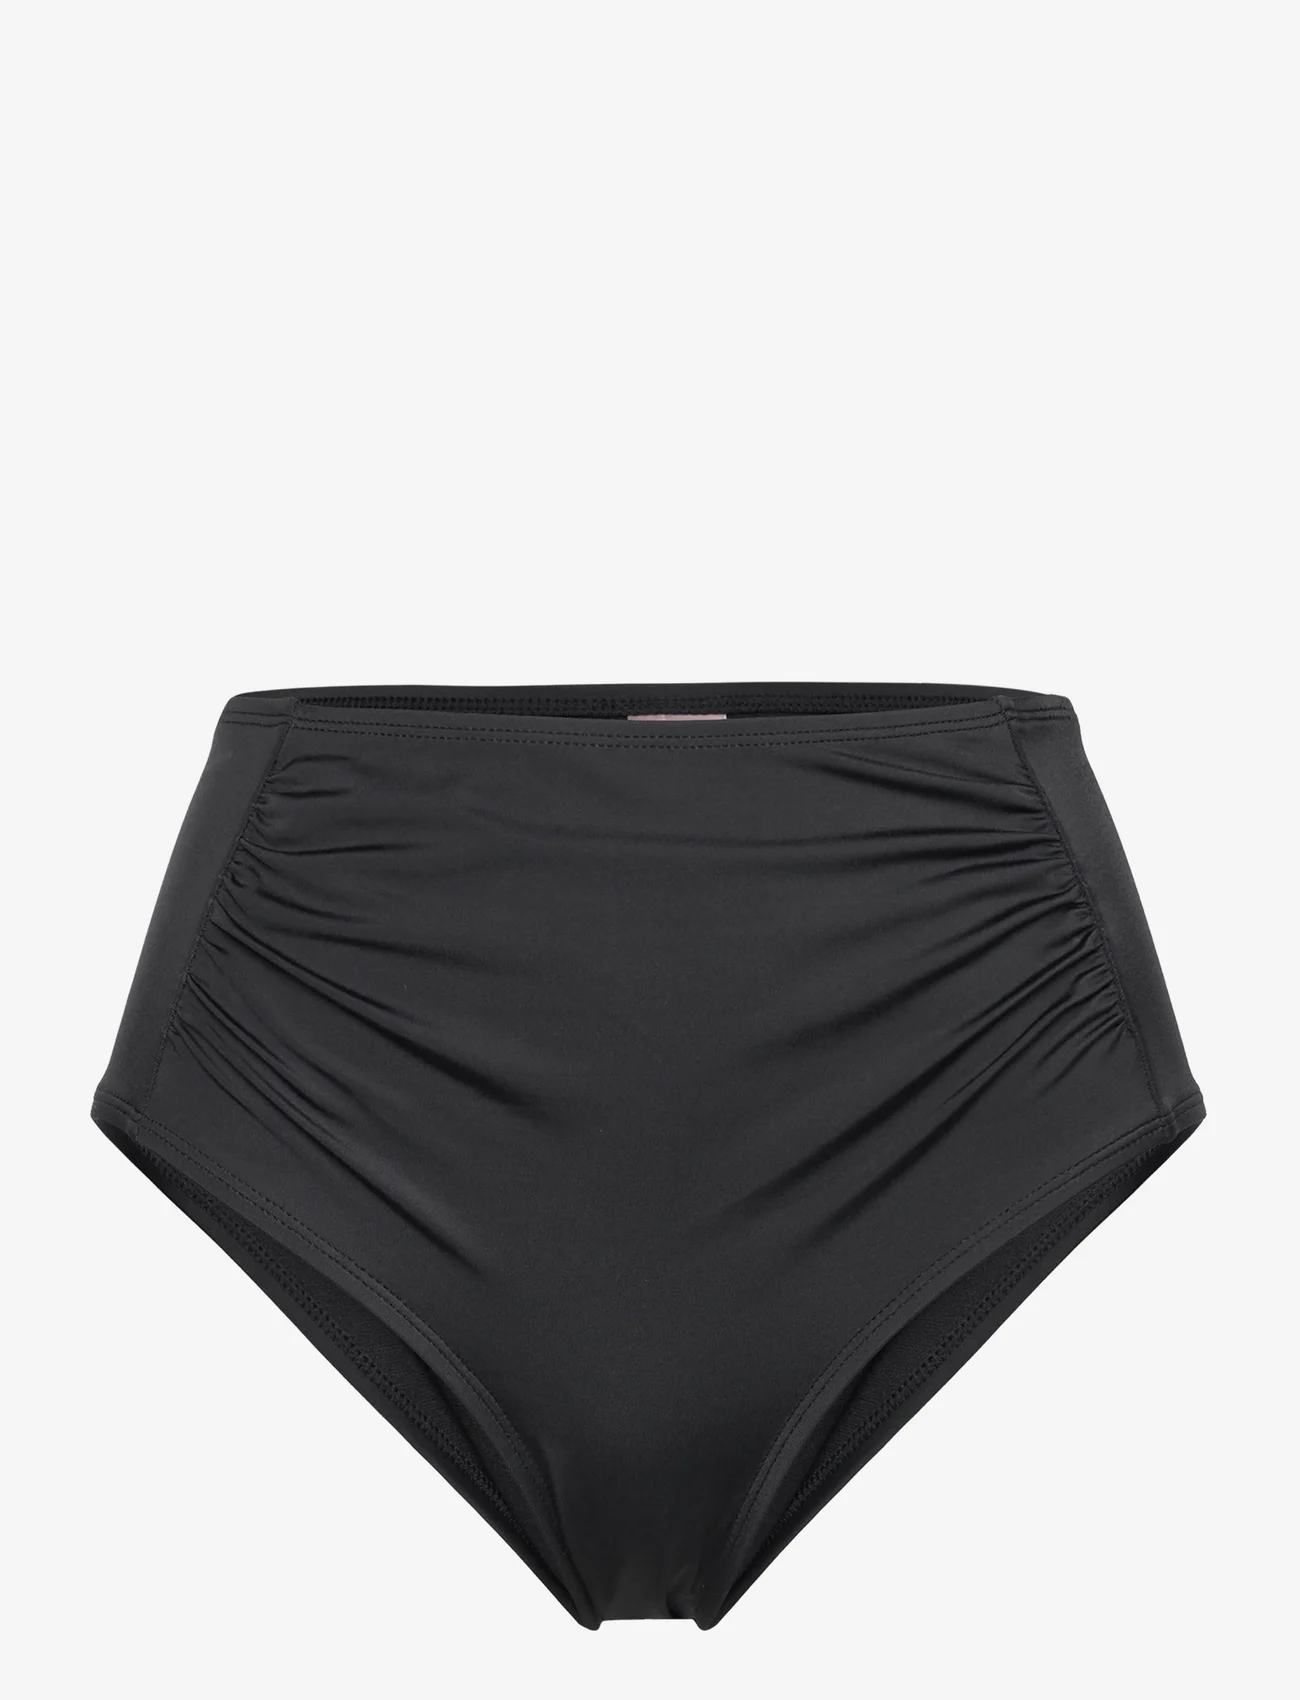 Hunkemöller - Luxe shaping cheeky hw - bikinihosen mit hoher taille - nero - 0